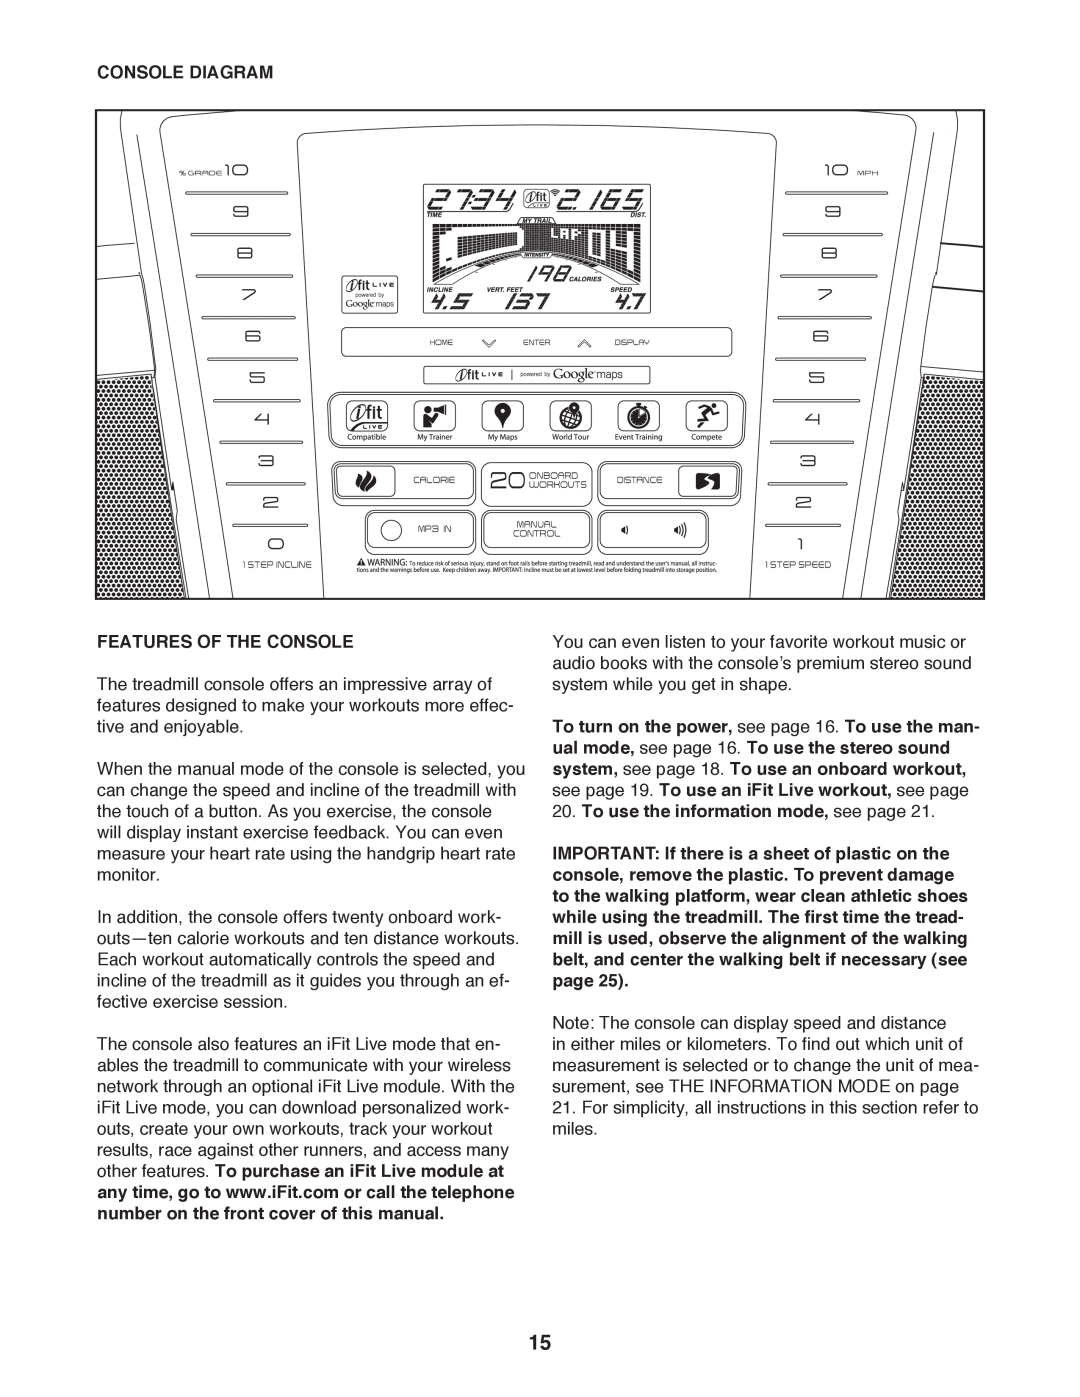 Sears NTL61011.1 user manual Console Diagram 